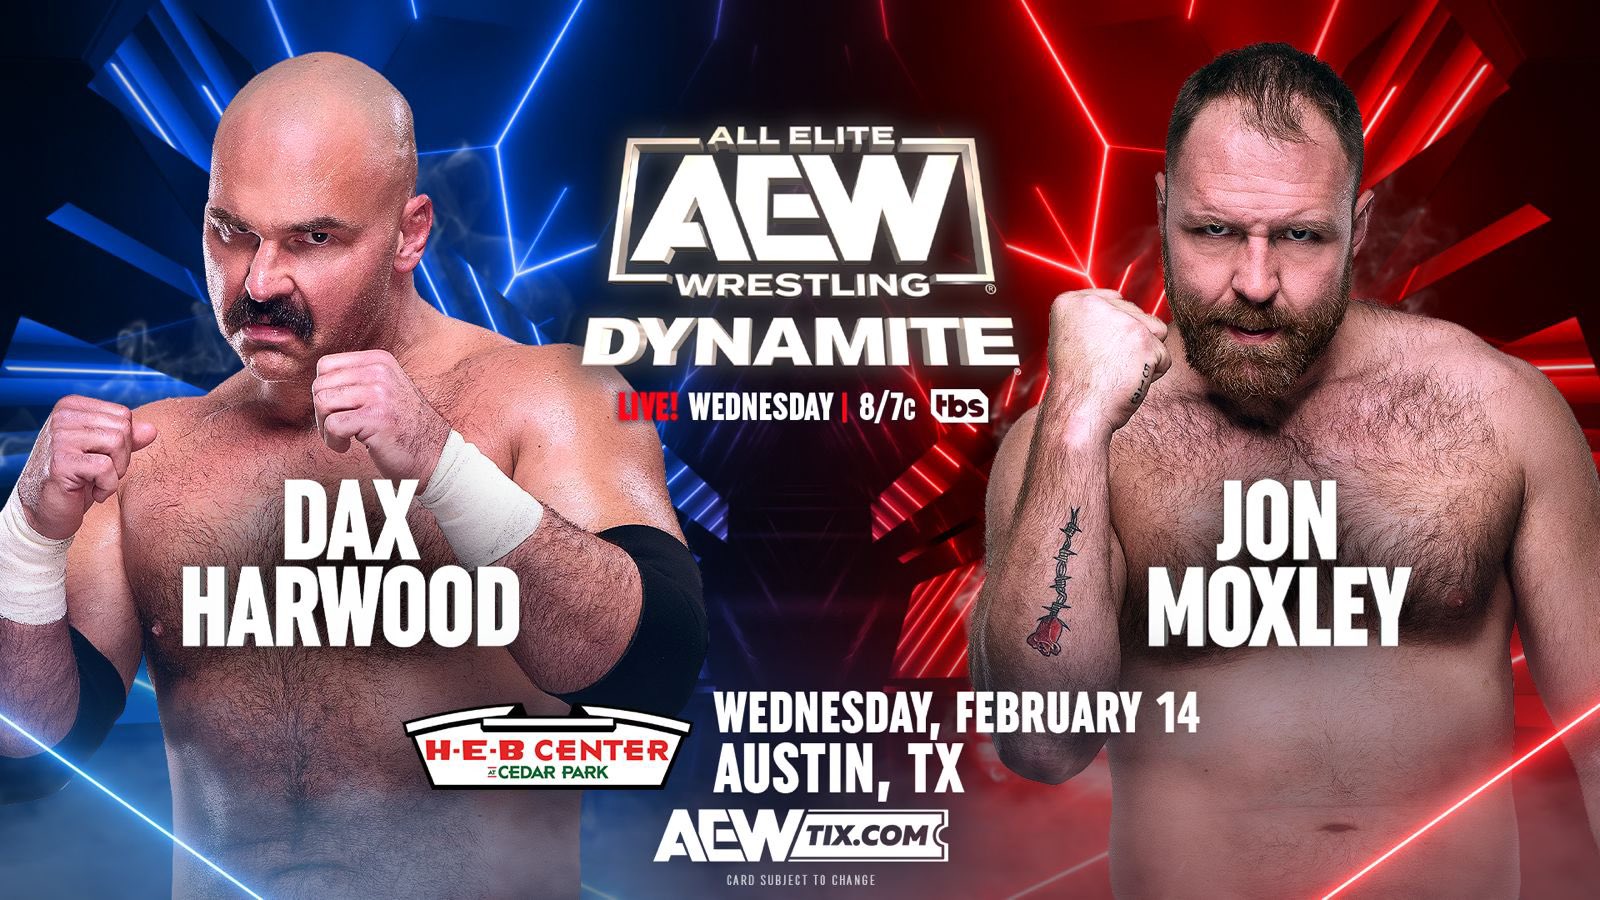 Jon Moxley Vs Dax Harwood Announced for 2/14 AEW Dynamite